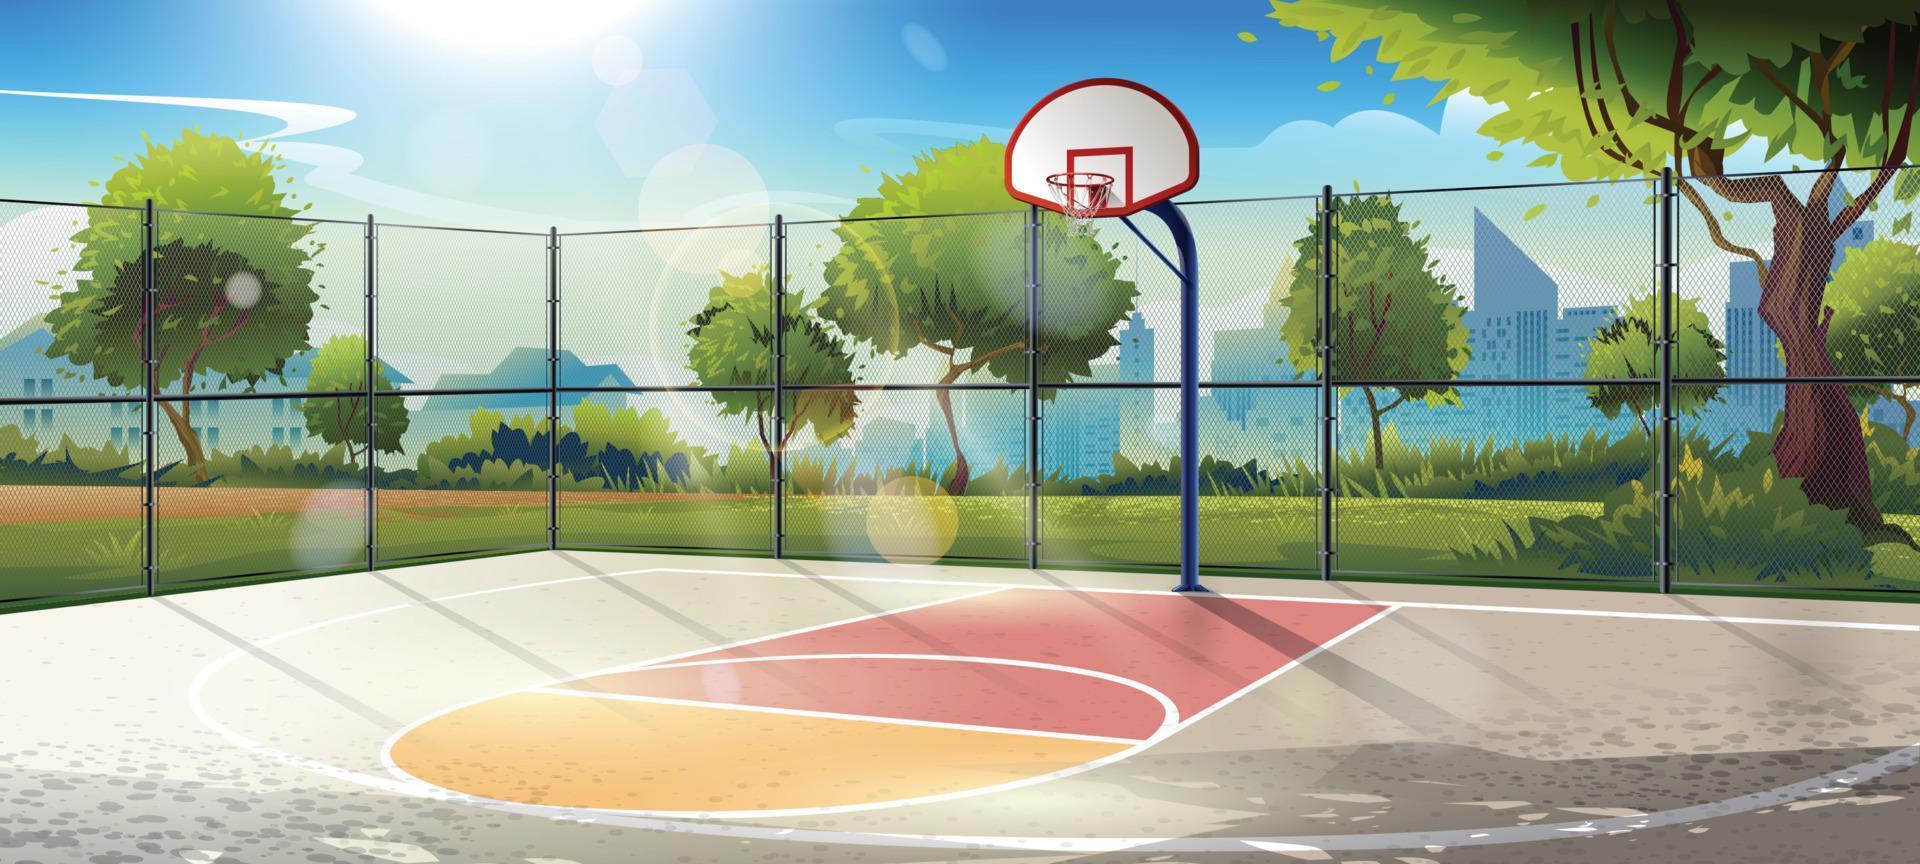 Outdoor Basketball Court Concept Background vector